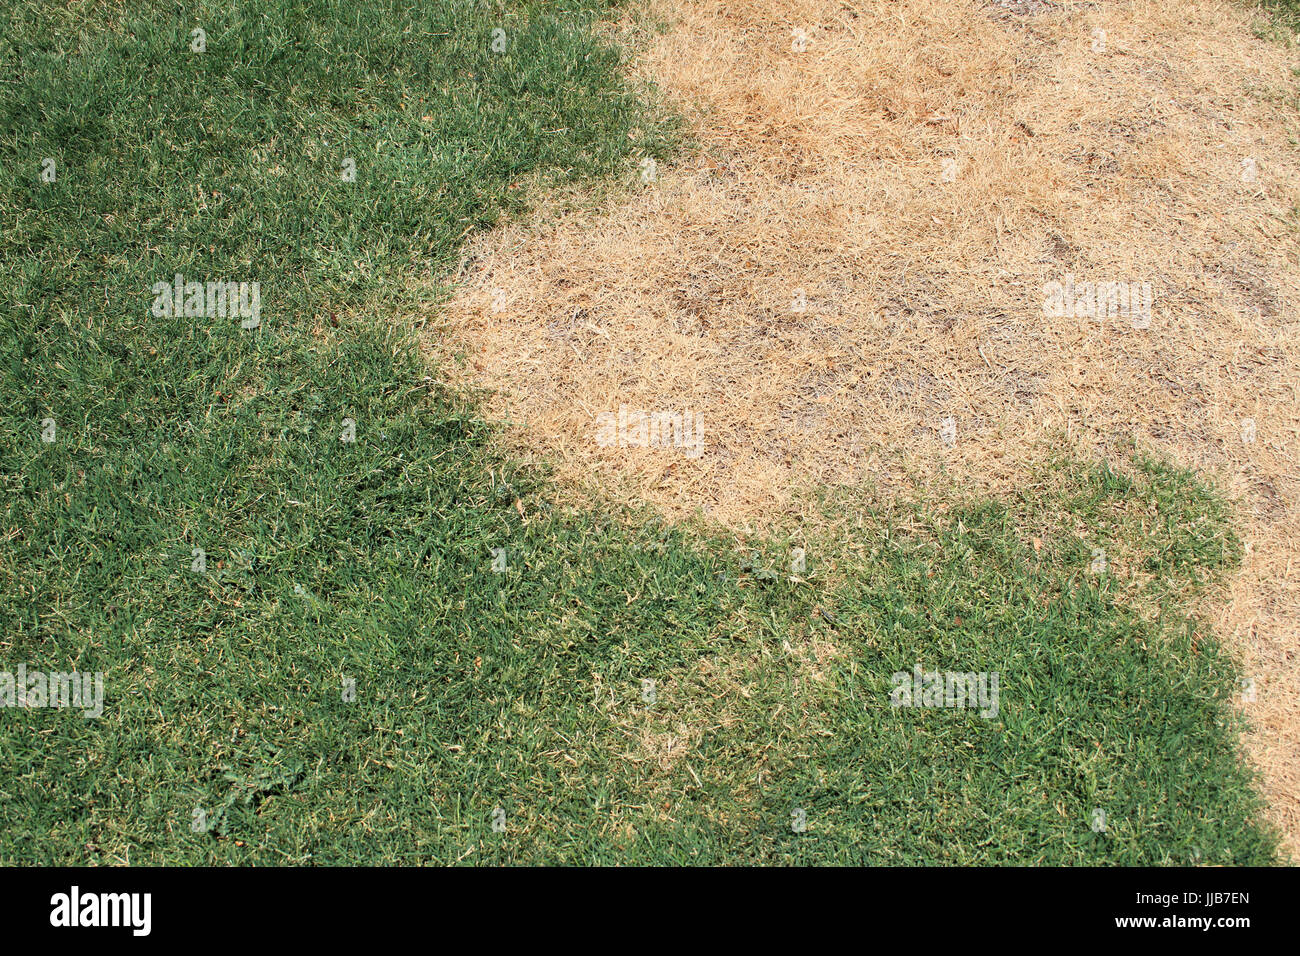 A patch of bermuda grass lawn shows brown spot or dead spot disease New Sod Turned Brown Is It Dead